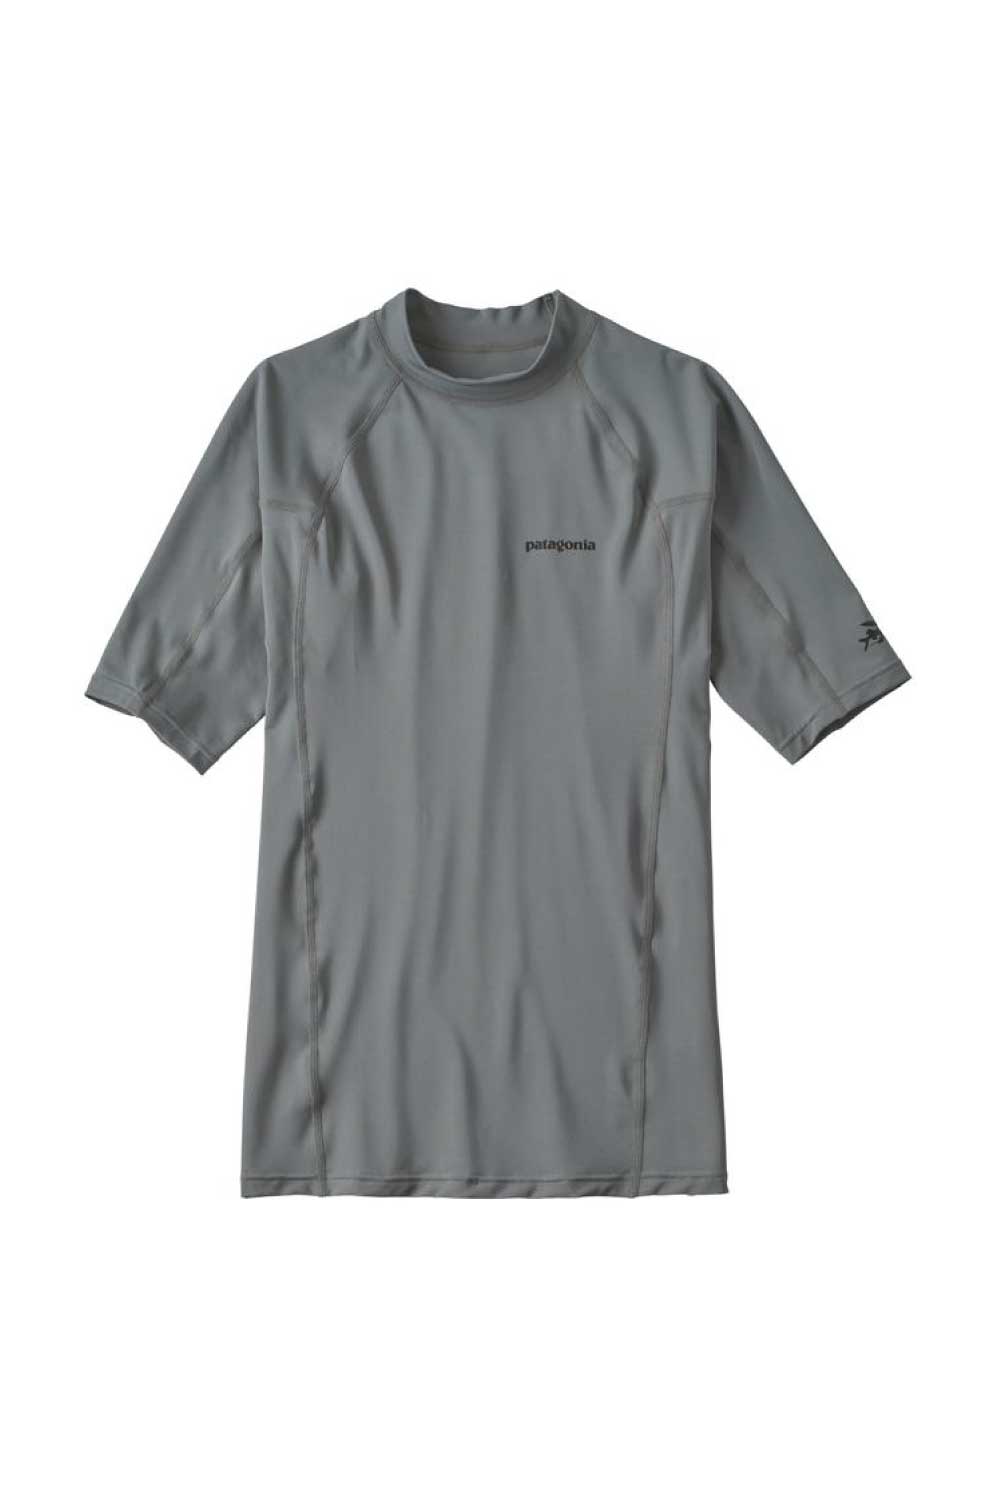 Patagonia Men's Short Sleeve R0 Rashshirt Top